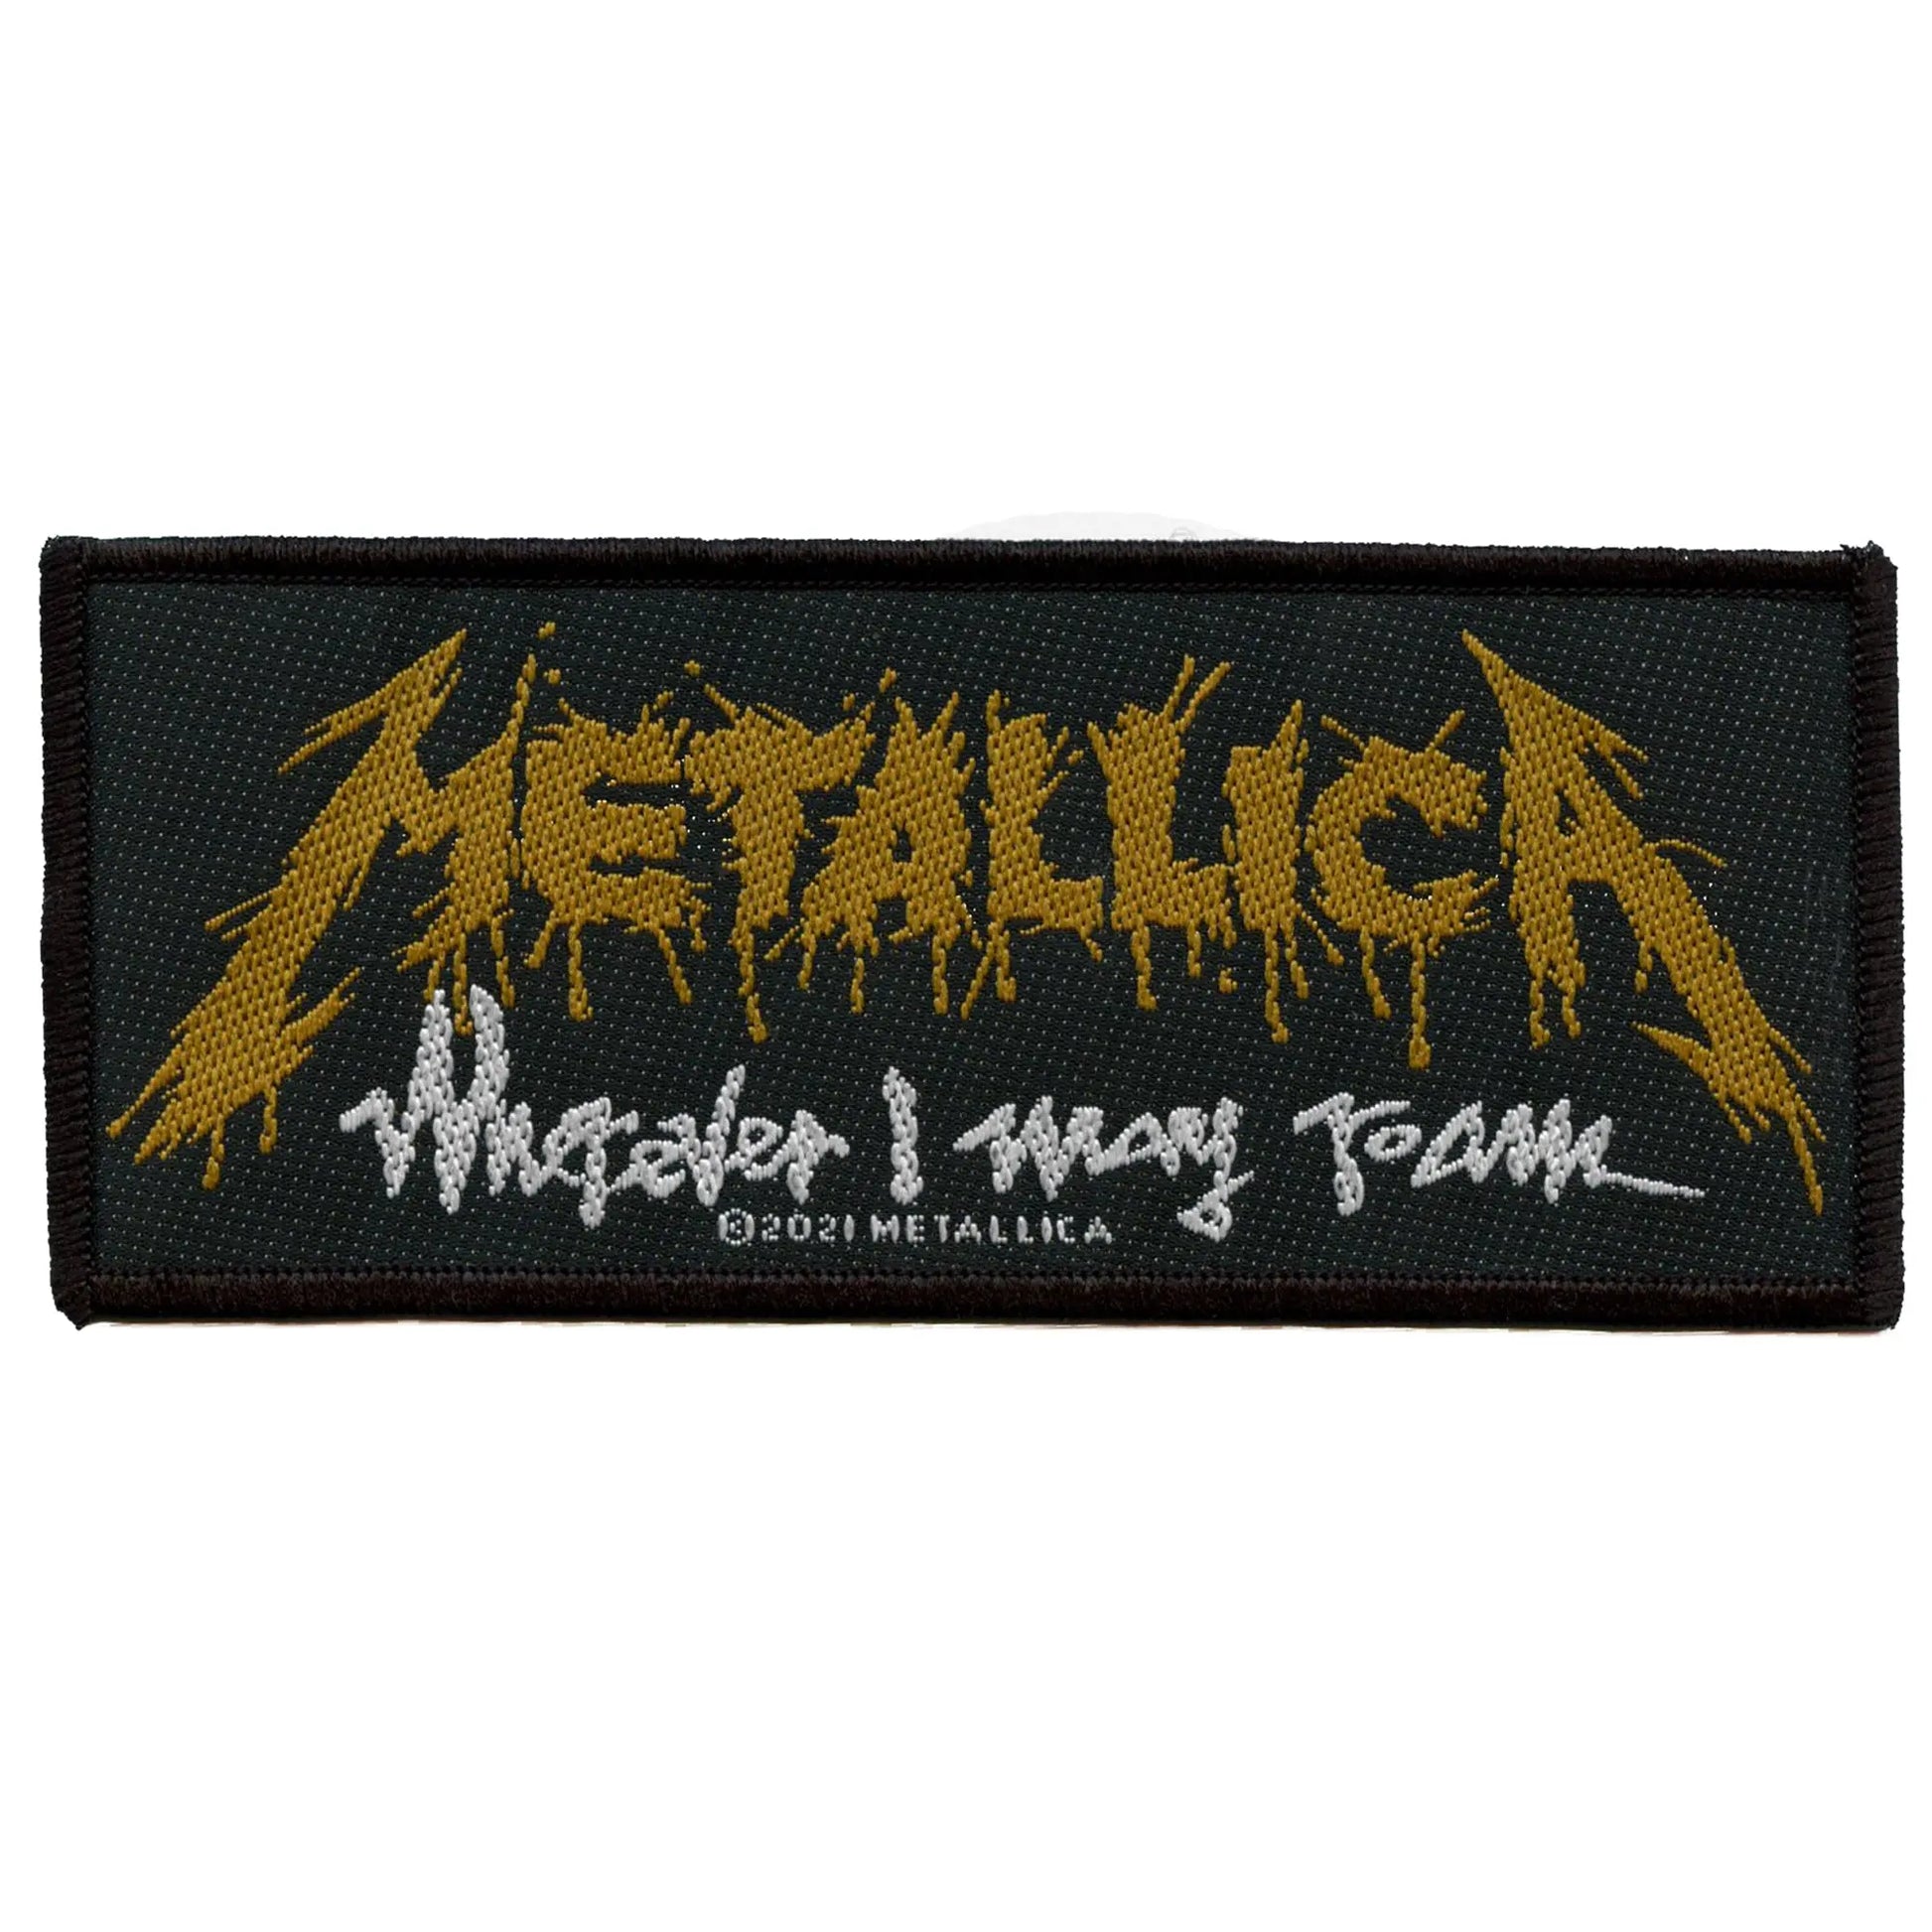 Metallica patch pack